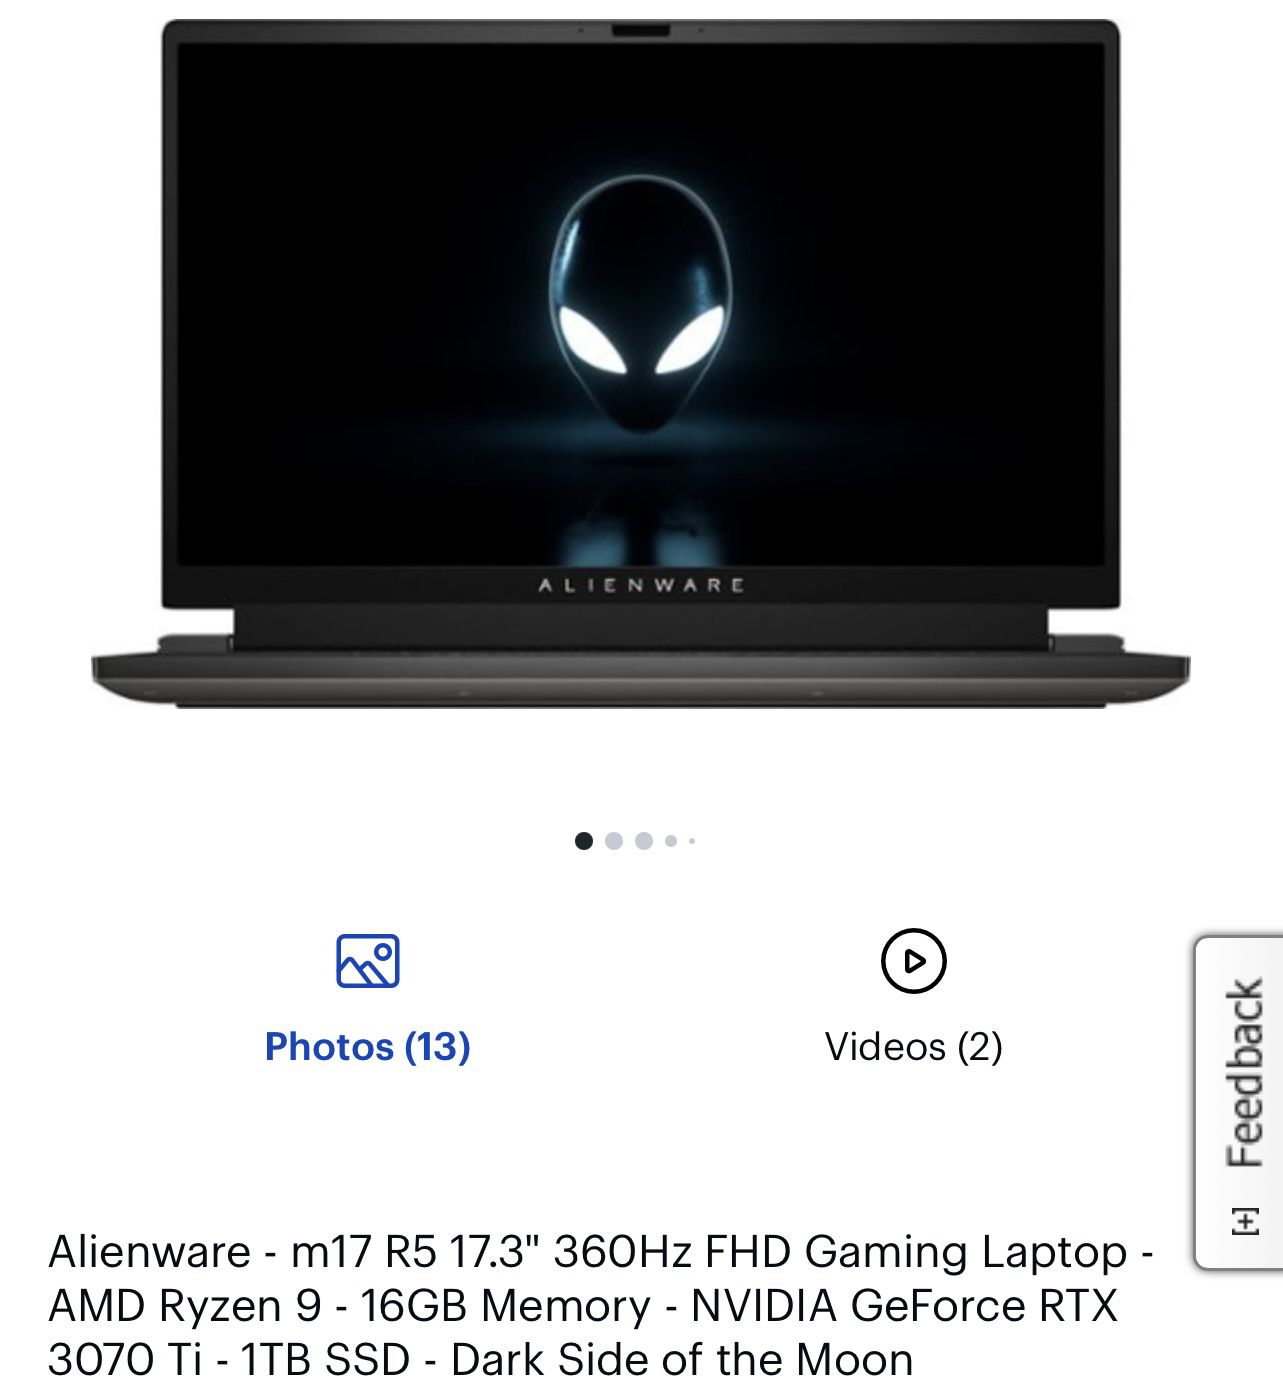 Alienware, m17 R5 17.3" 360Hz FHD Gaming Laptop, AMD Ryzen 9, 16GB Memory, GeForce RTX 3070 Ti, 1tb